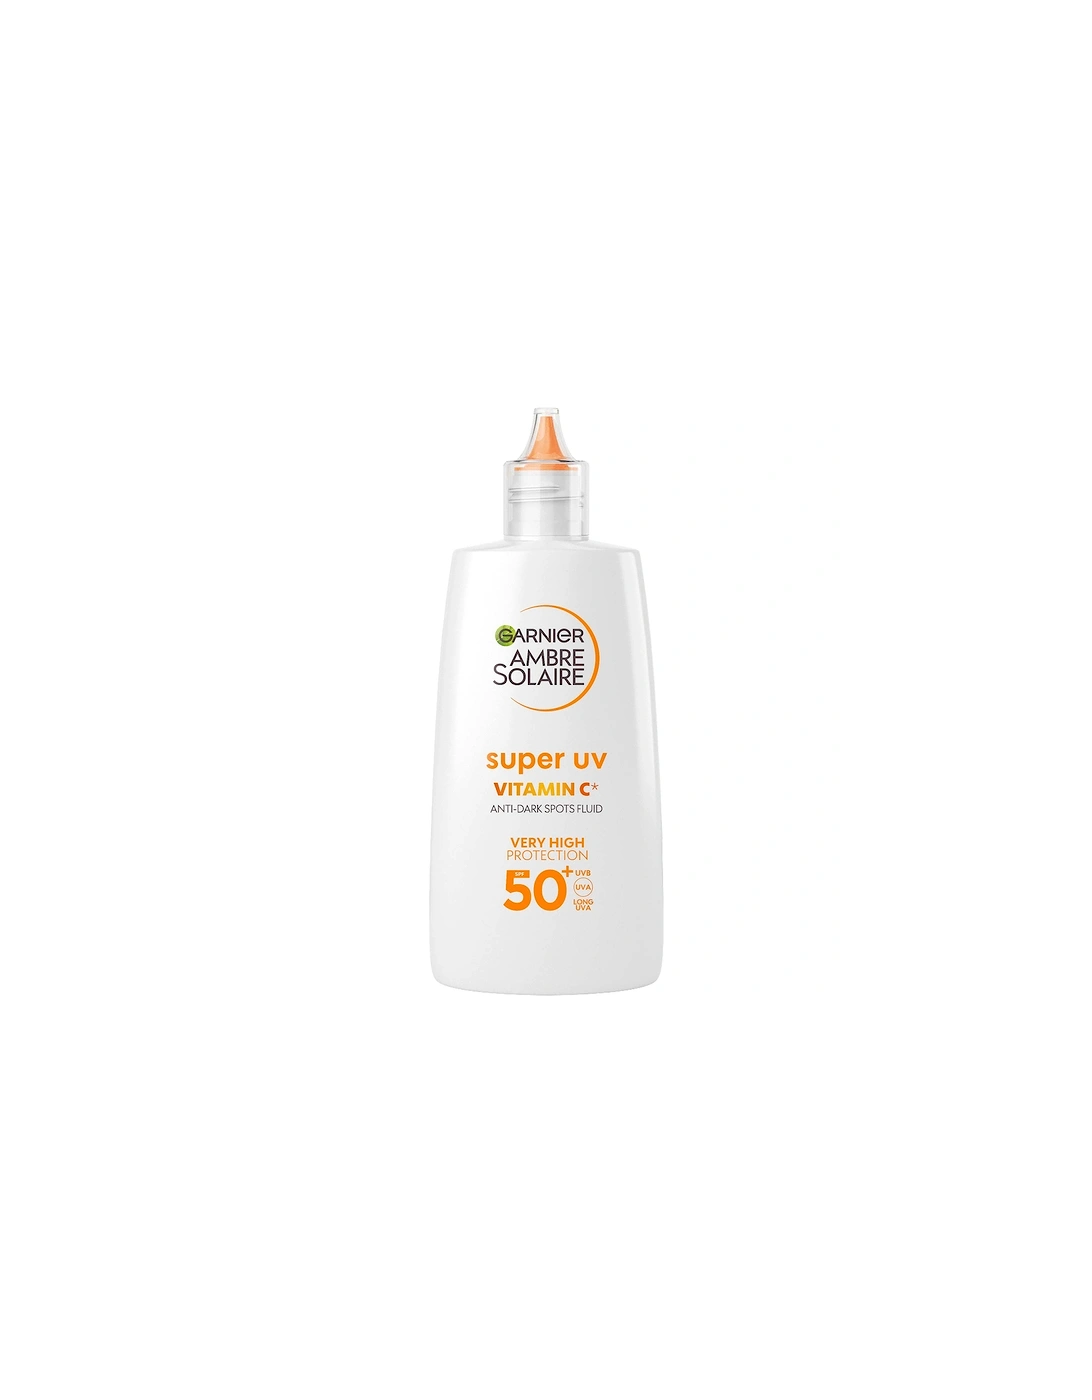 Ambre Solaire Super UV Vitamin C Facial Fluid for Daily Use SPF 50+ 40ml, 2 of 1